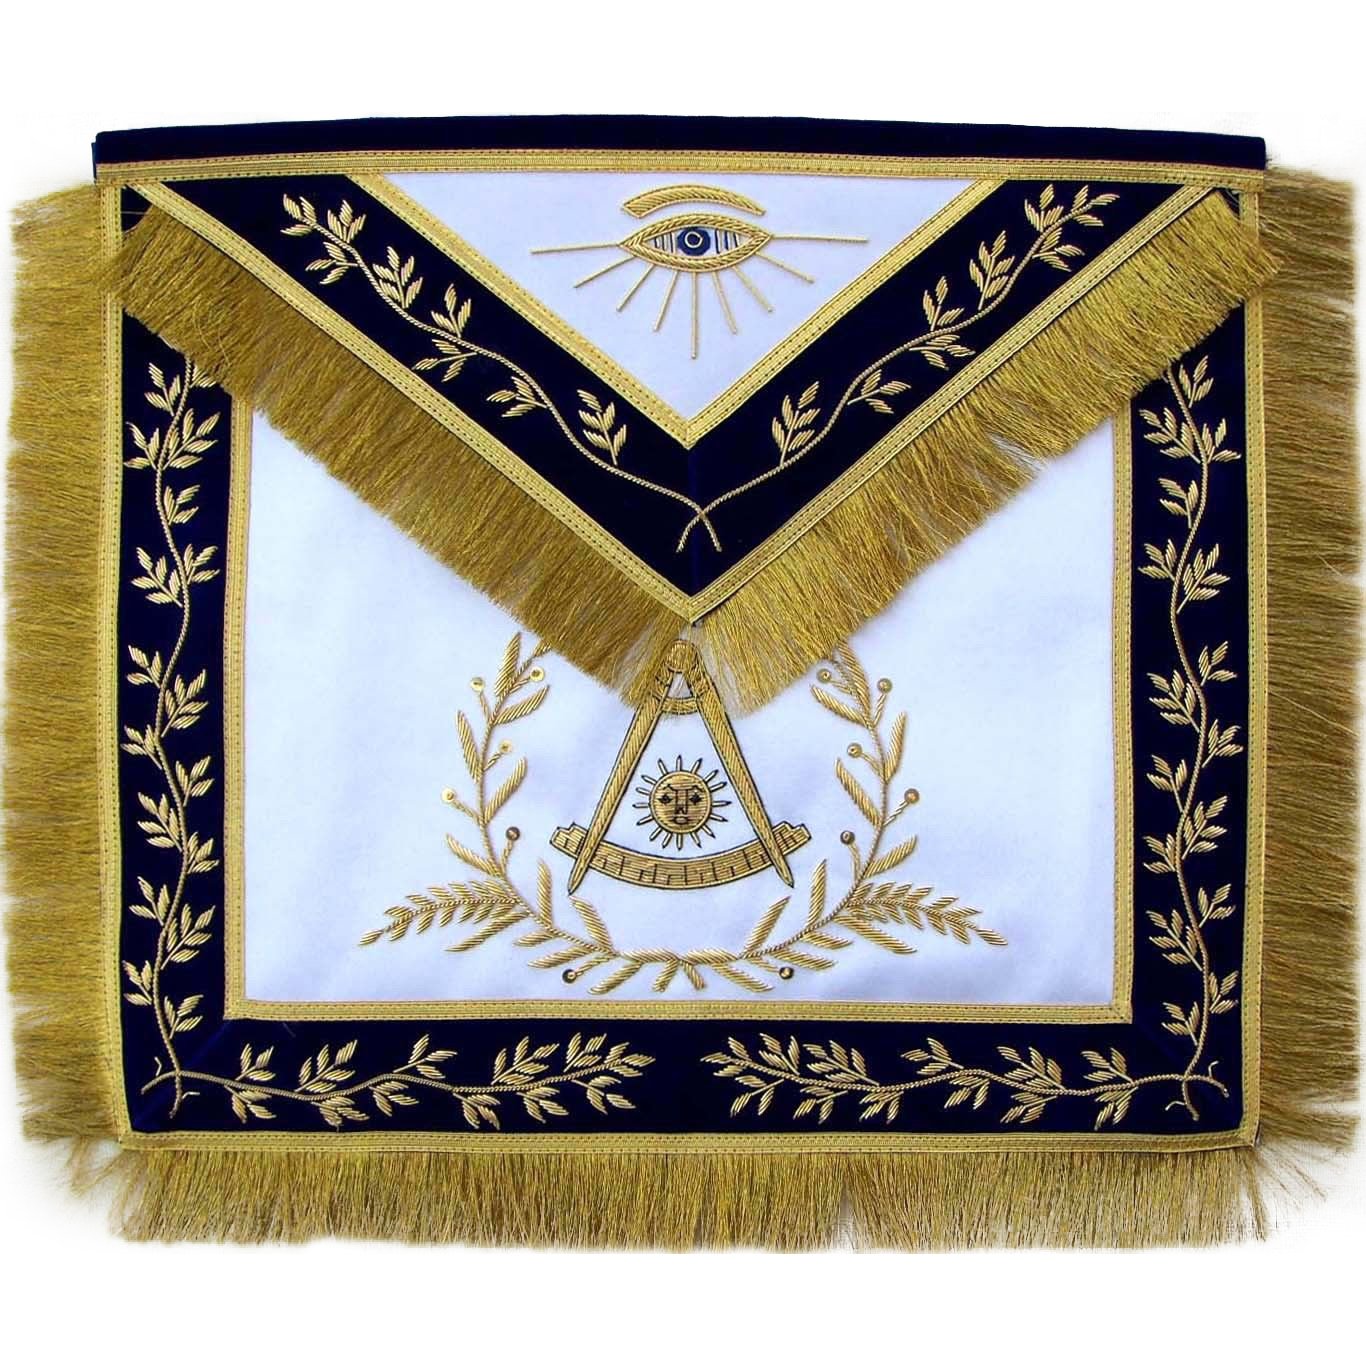 Past Master Blue Lodge Apron - Navy Blue with Gold Hand Embroidery & Fringe Tassels - Bricks Masons